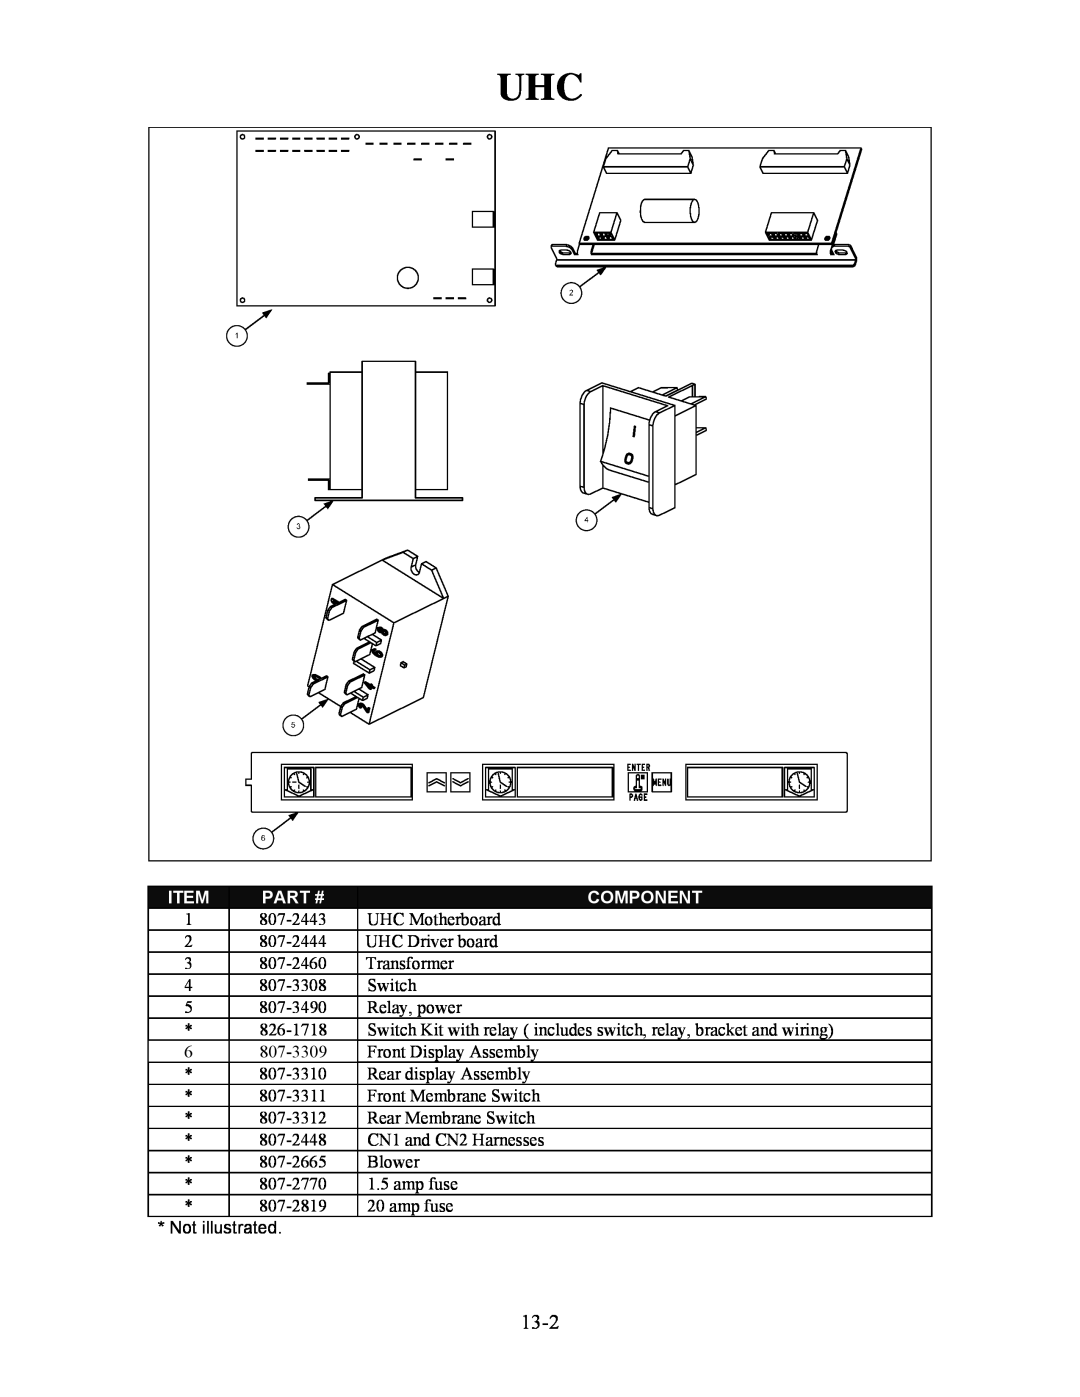 Frymaster H55 manual 13-2, Part #, Component 